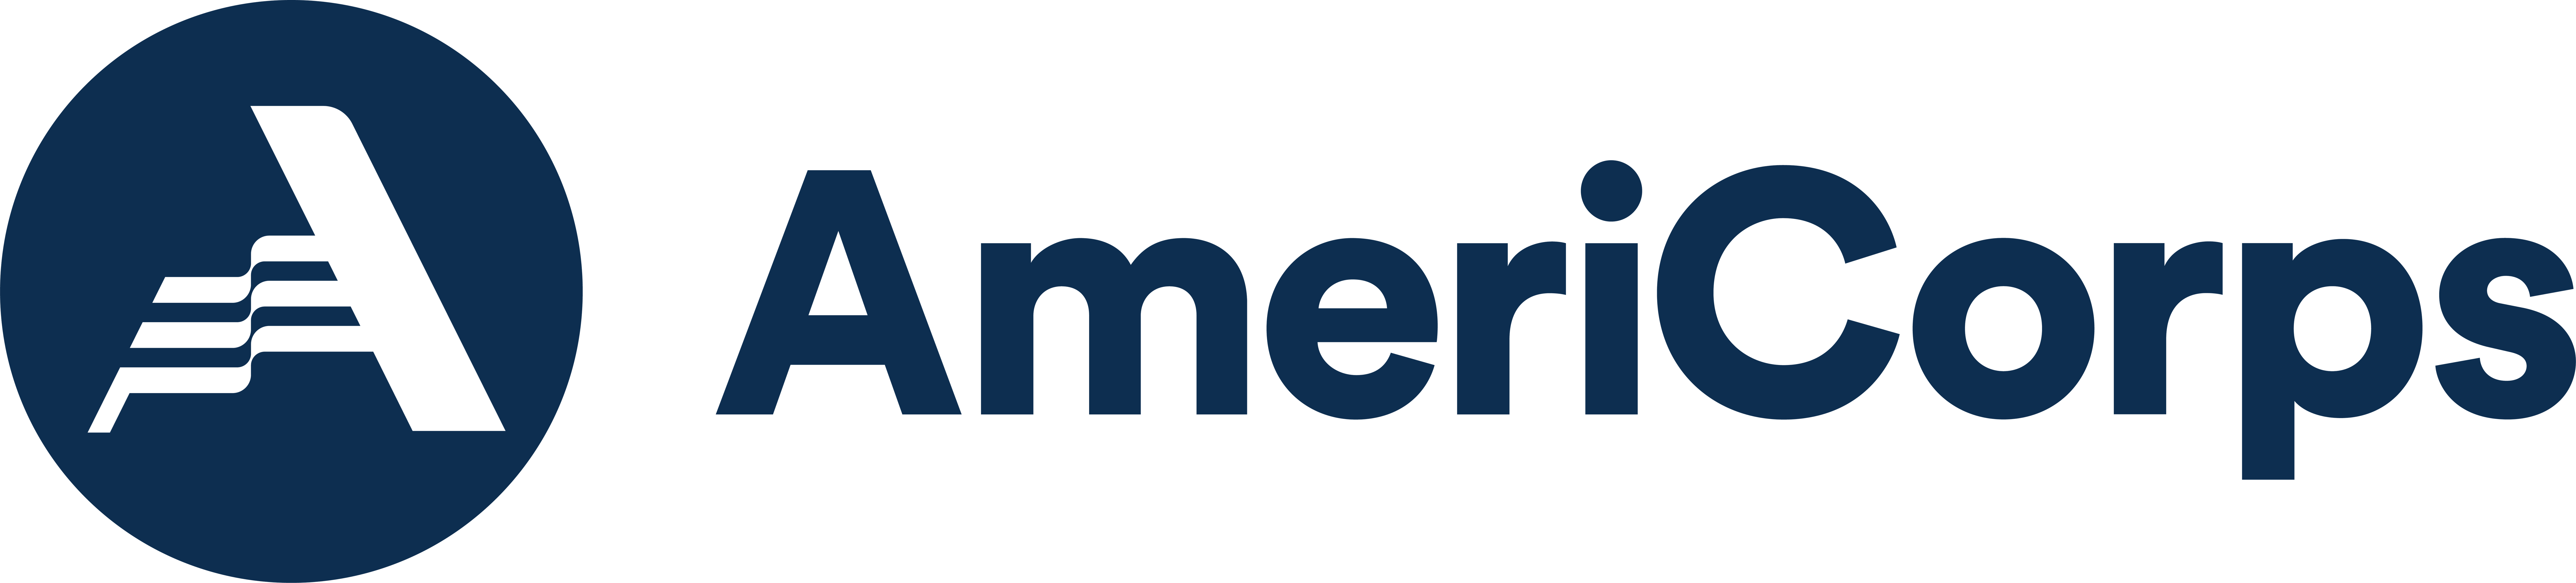 AmeriCorps navy logo 